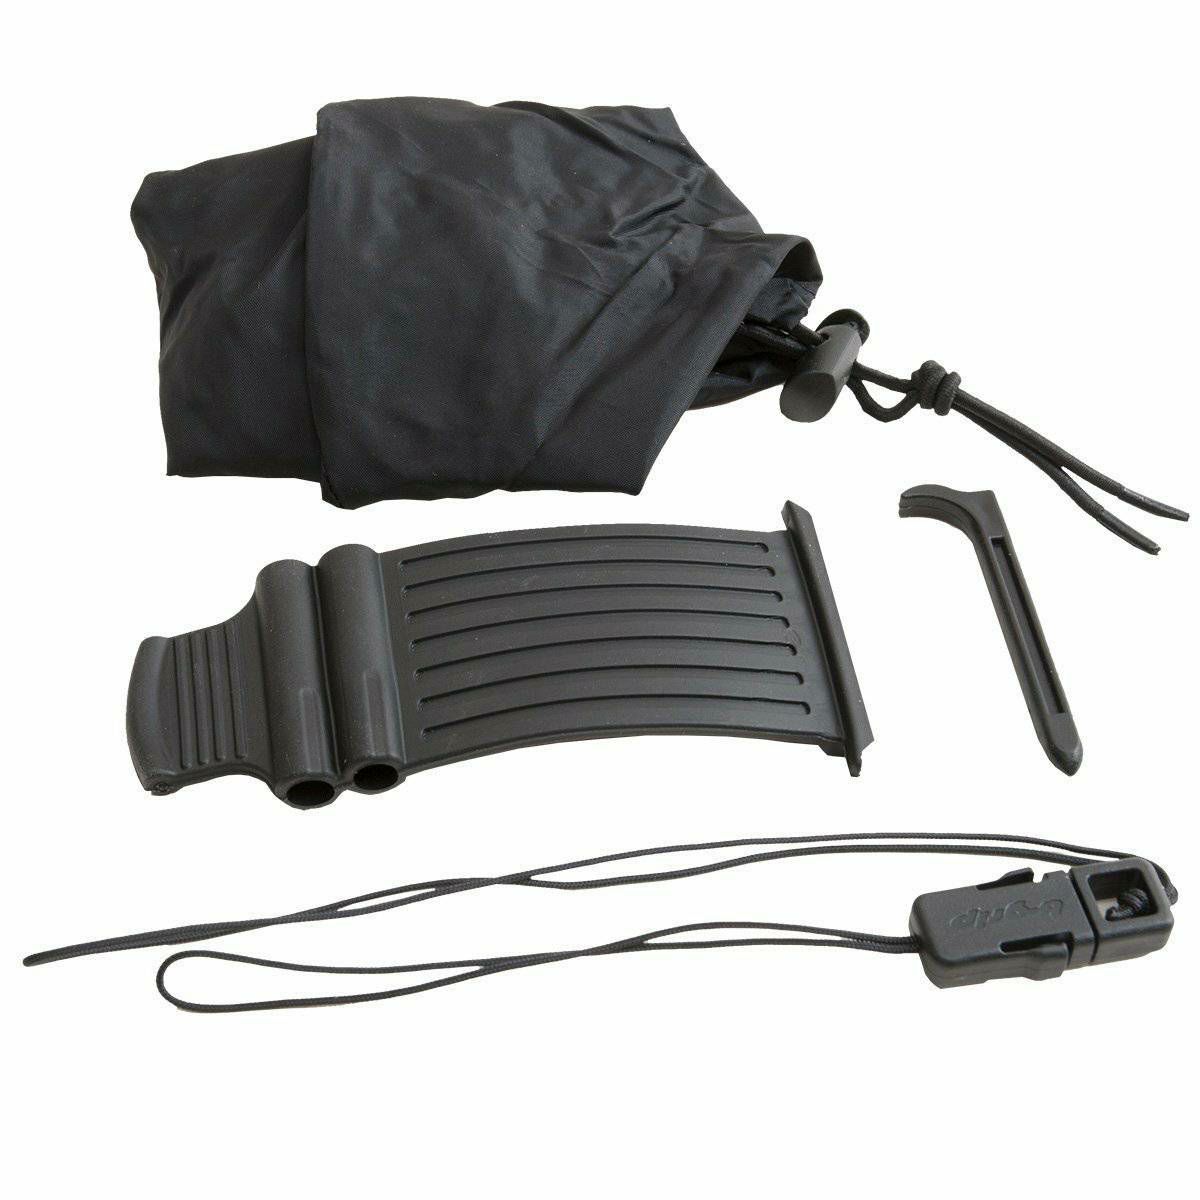 B-Grip Adventure basic Kit including Raincover (140-N)